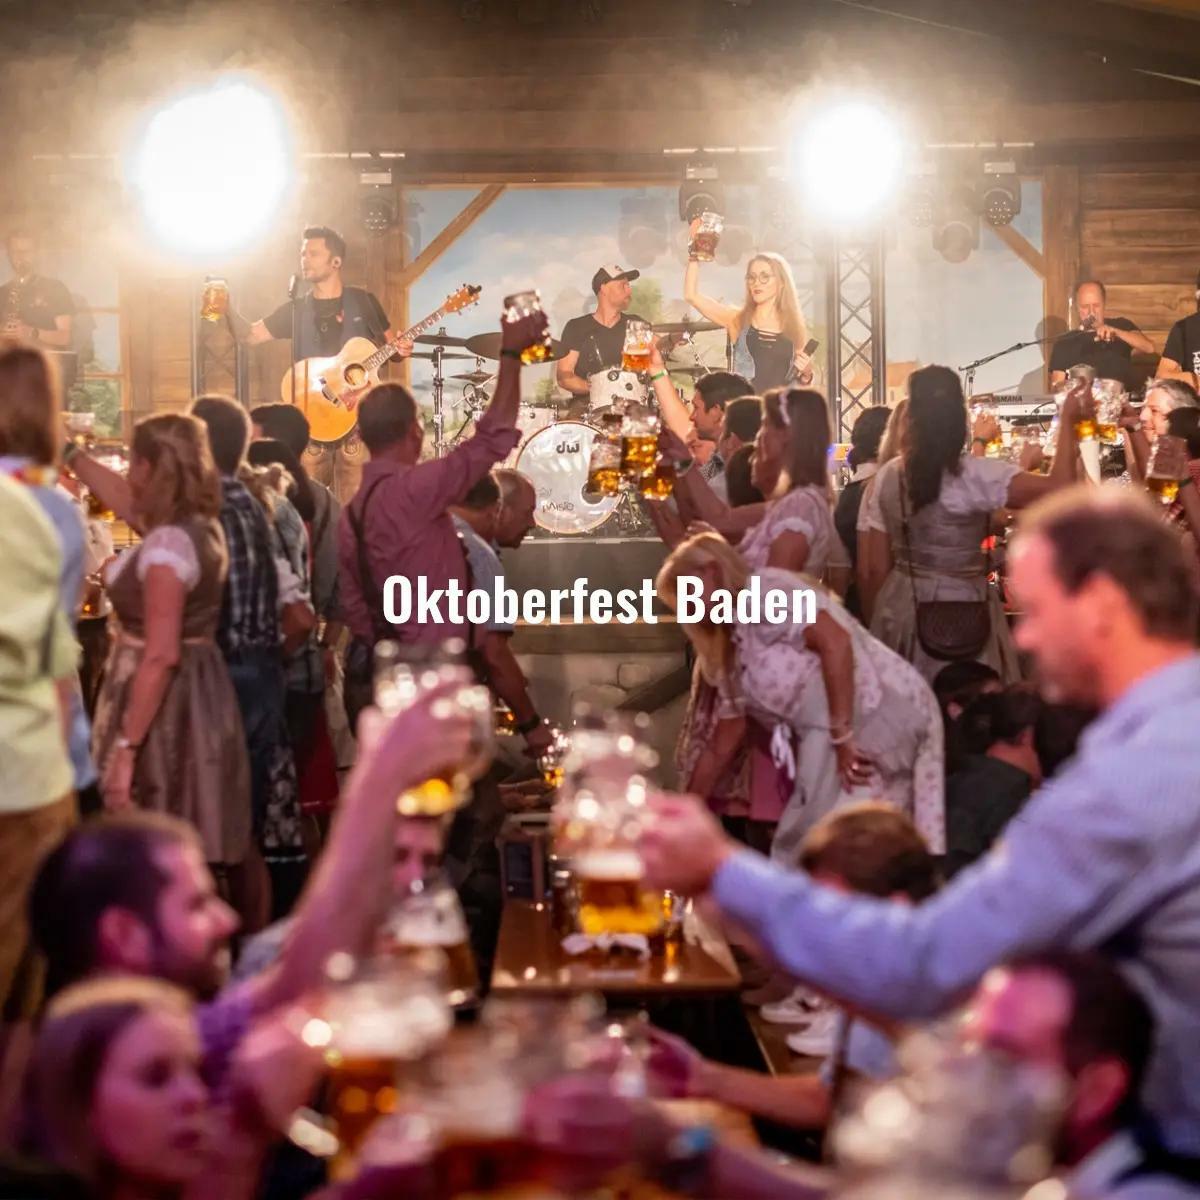 Oktoberfest Baden - The most splendid Oktoberfest in Switzerland